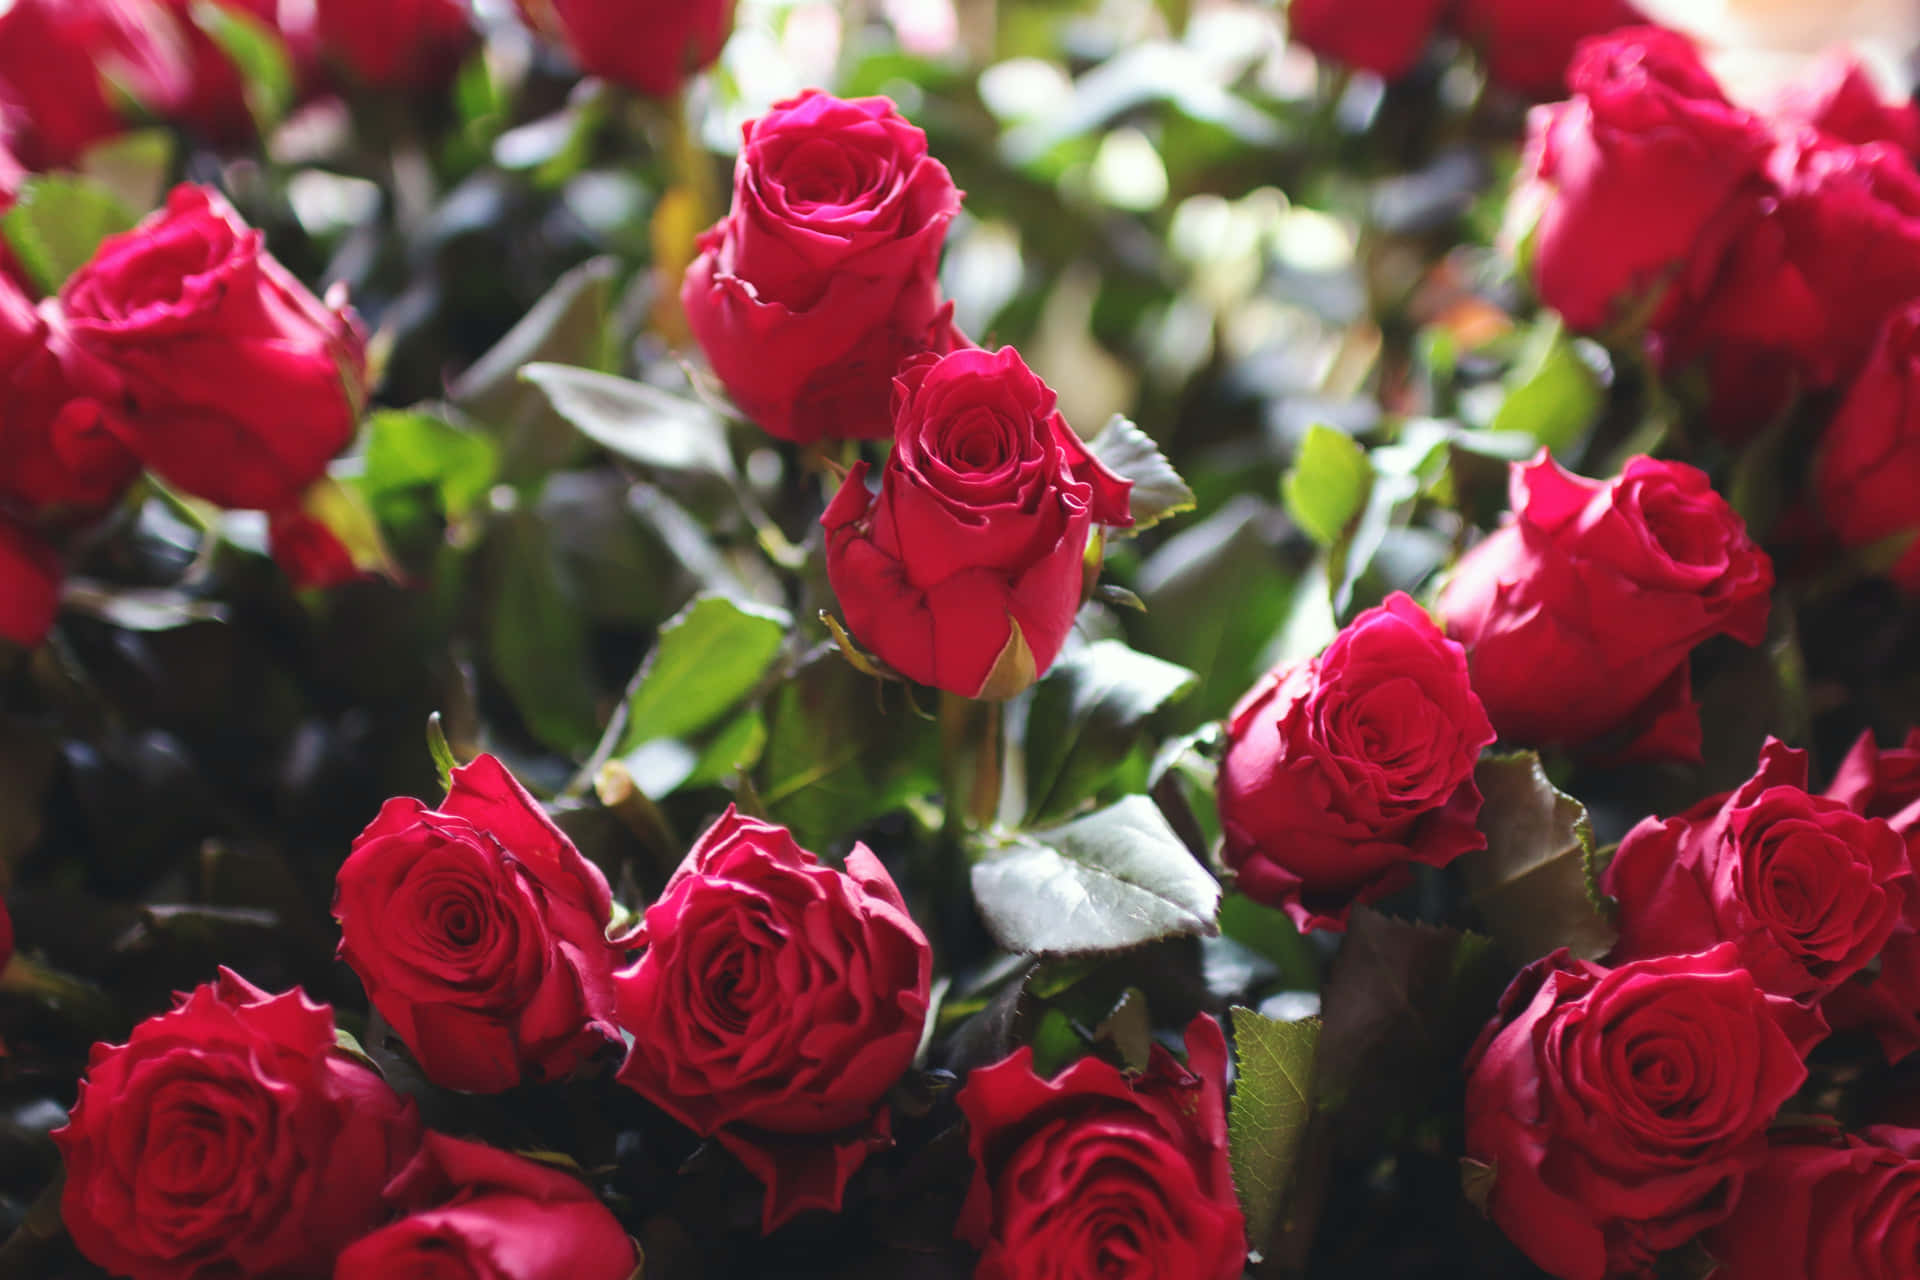 Unincantevole Bouquet Di Bellissime Rose Rosse